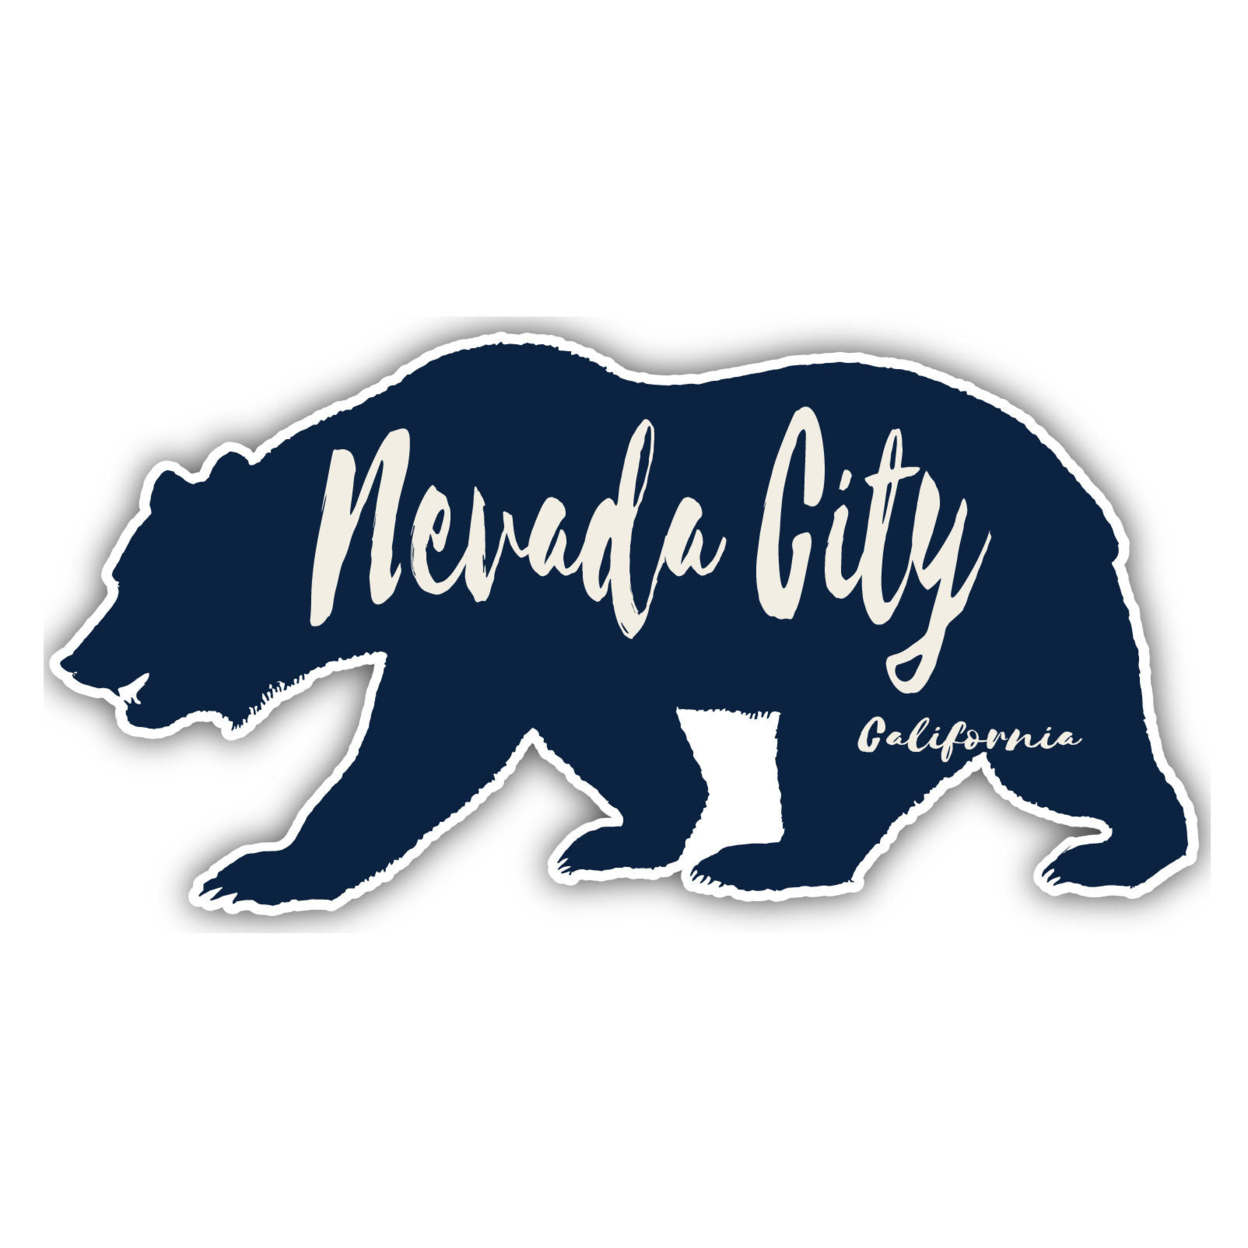 Nevada City California Souvenir Decorative Stickers (Choose Theme And Size) - Single Unit, 2-Inch, Camp Life